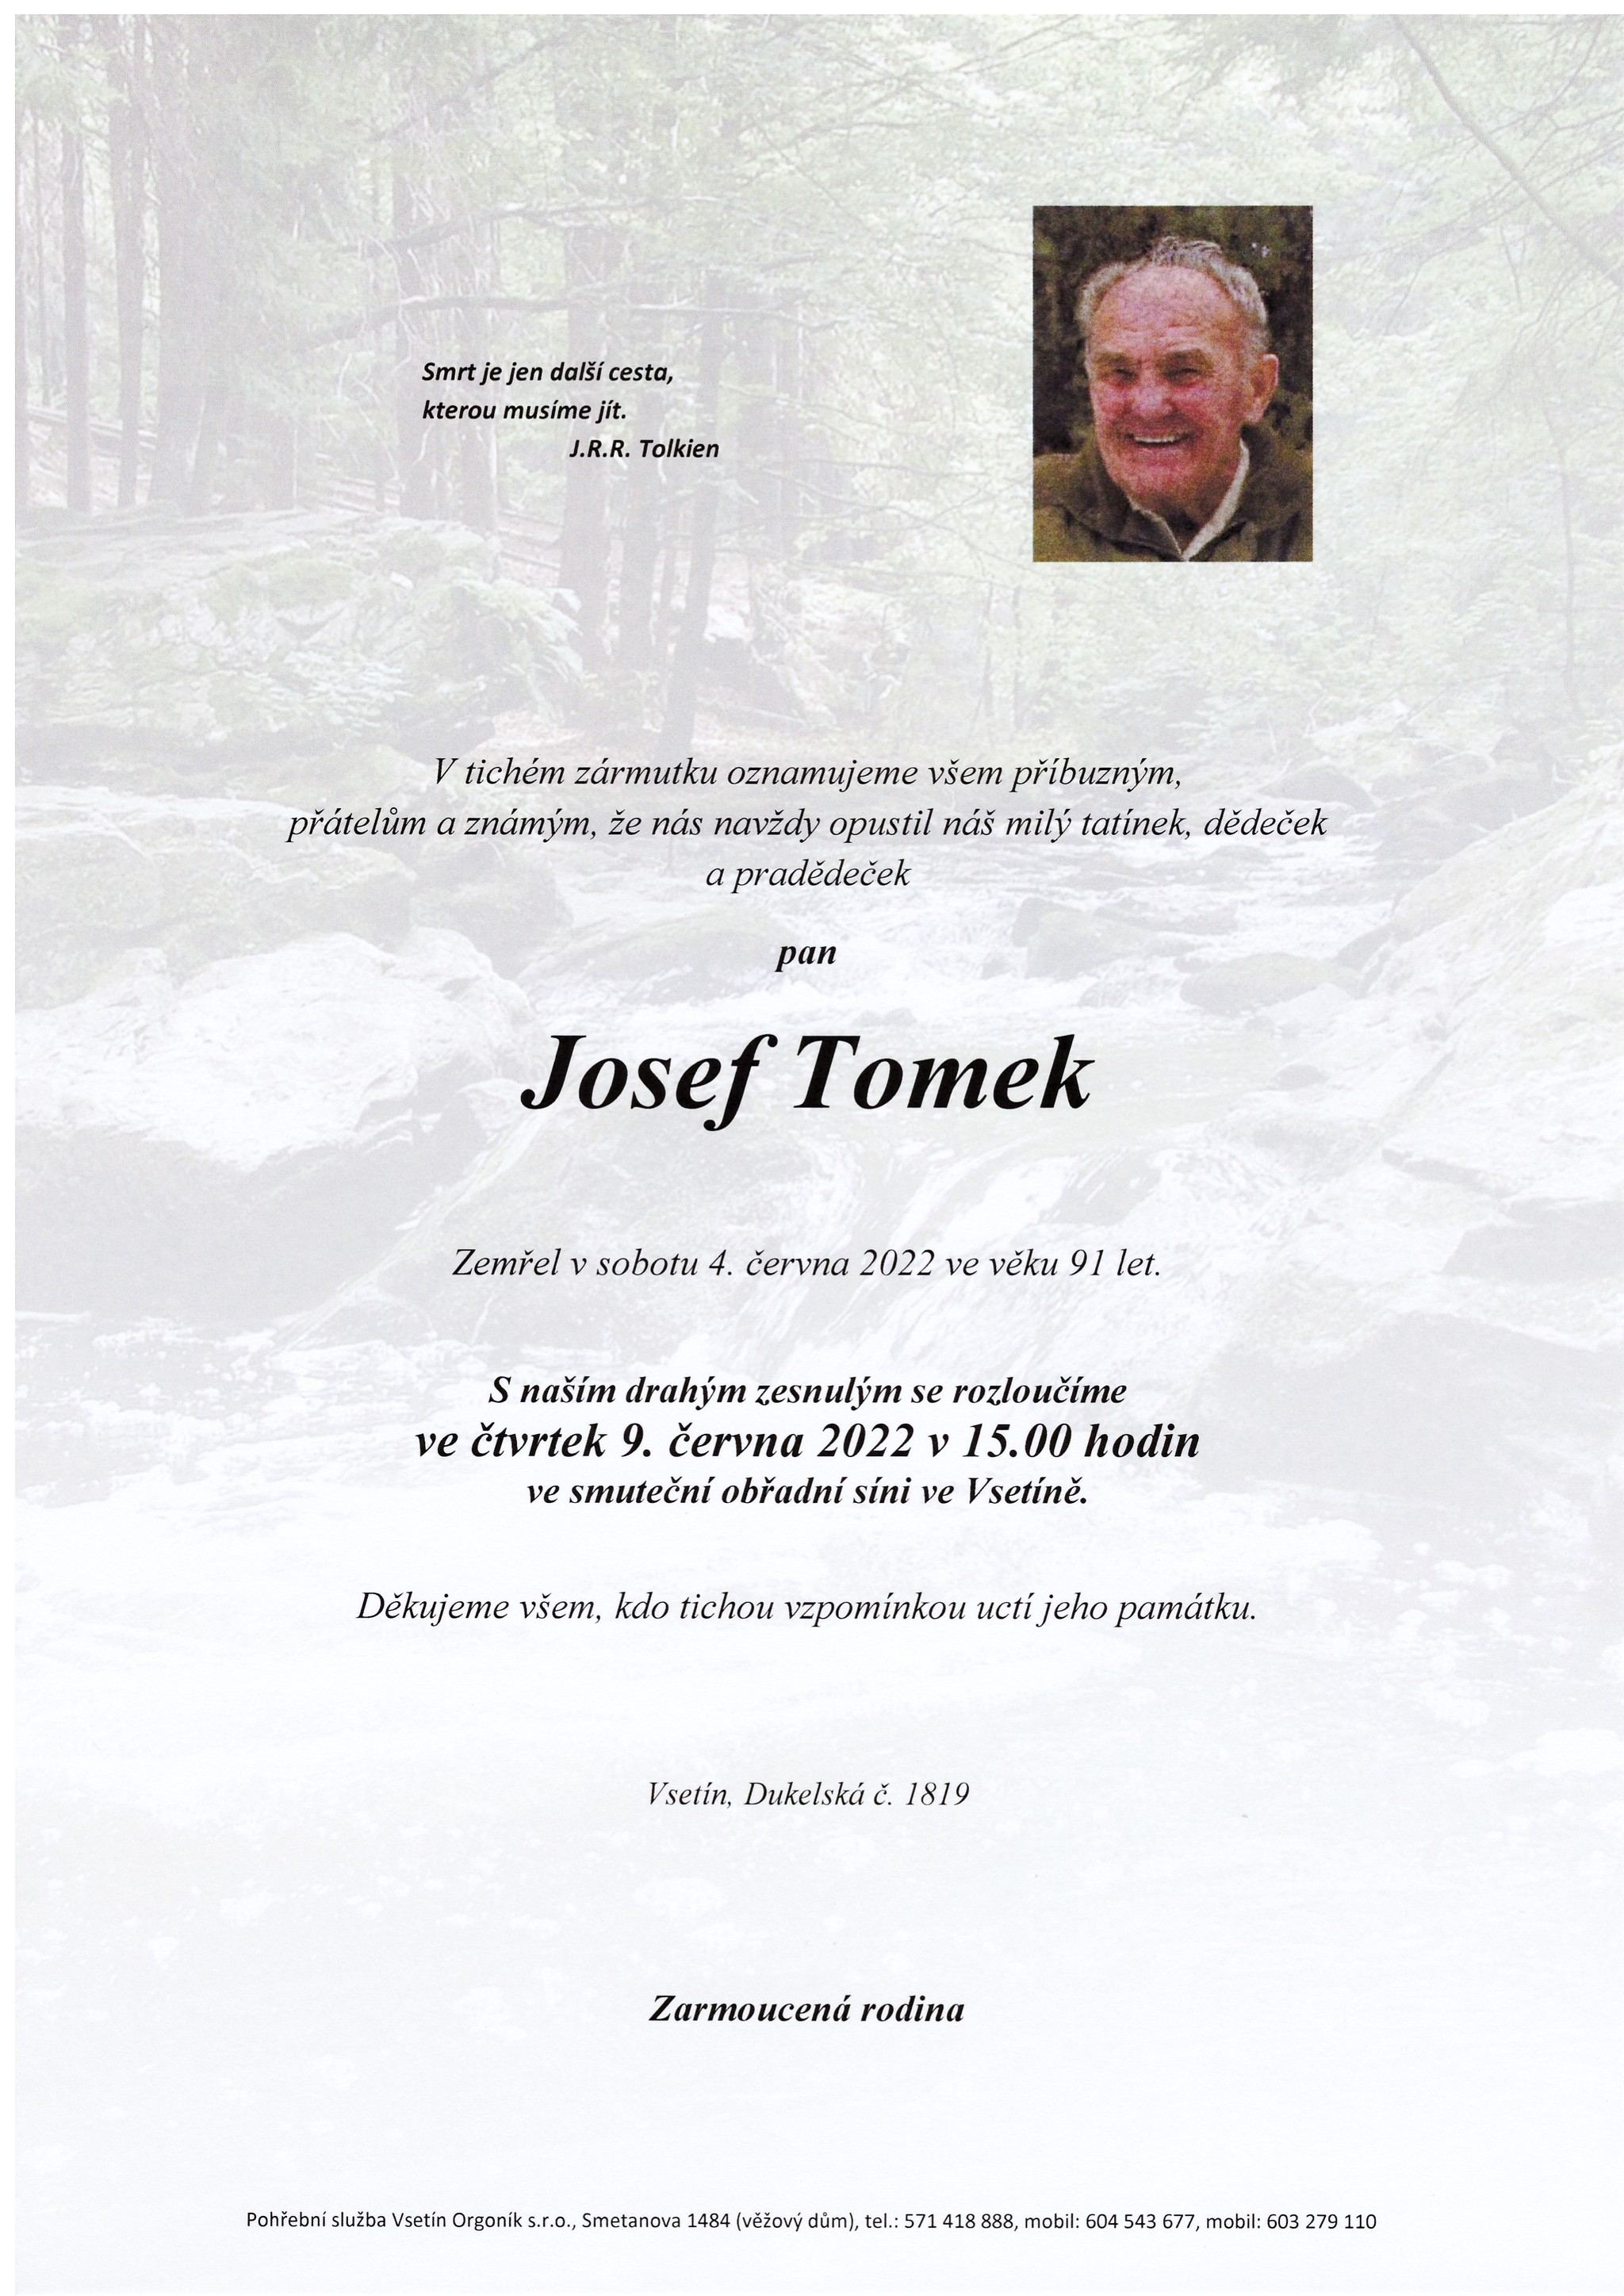 Josef Tomek